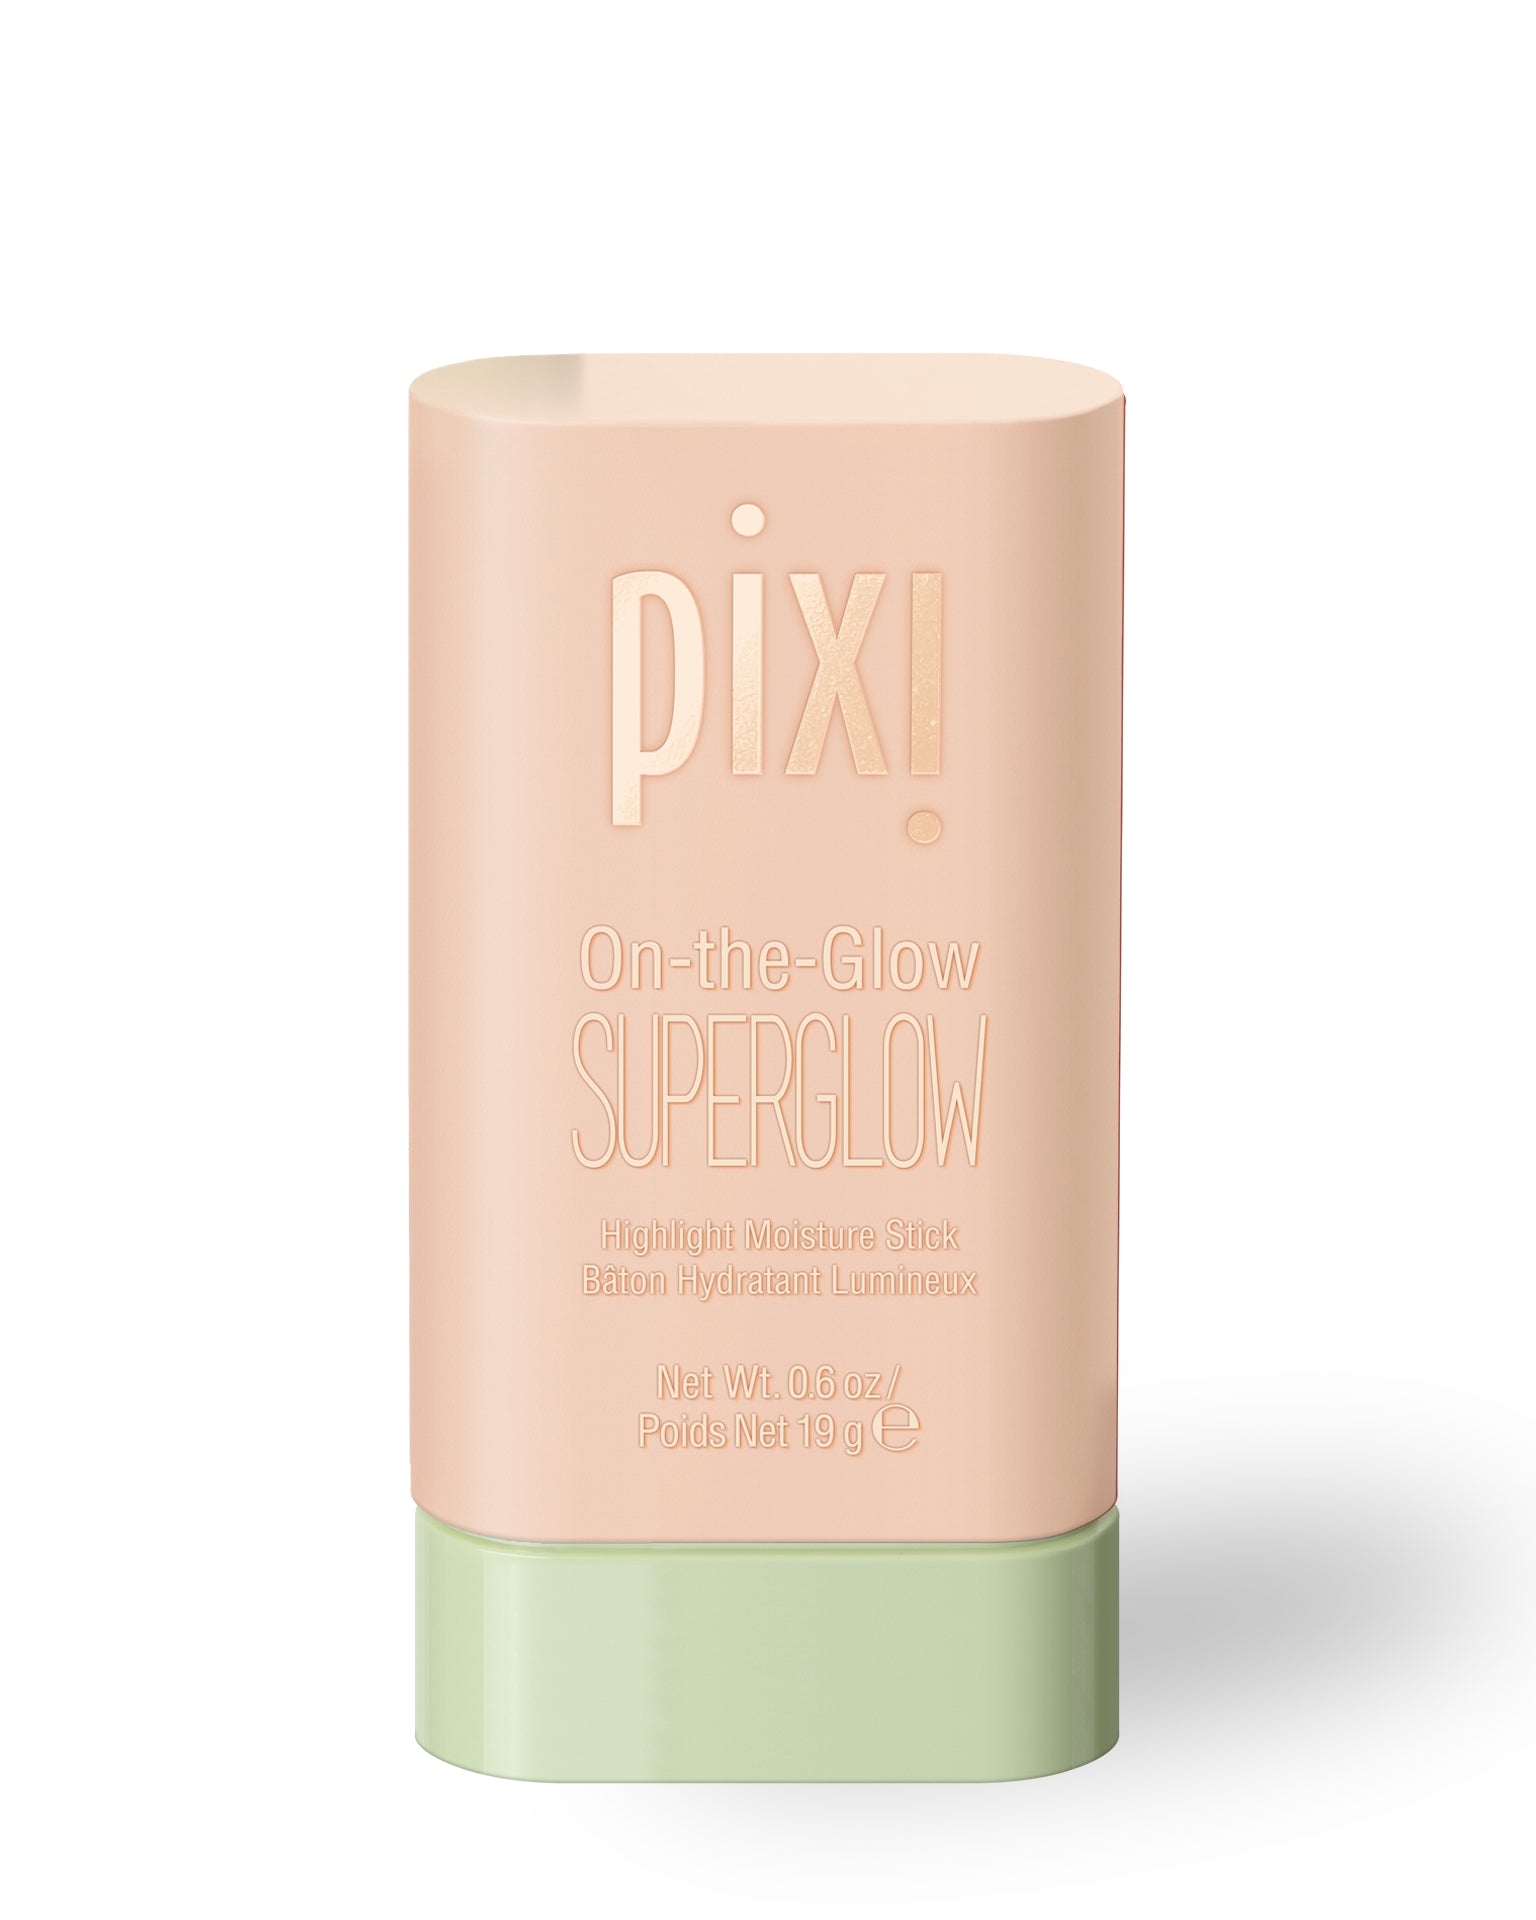 Pixi On-the-Glow SuperGlow